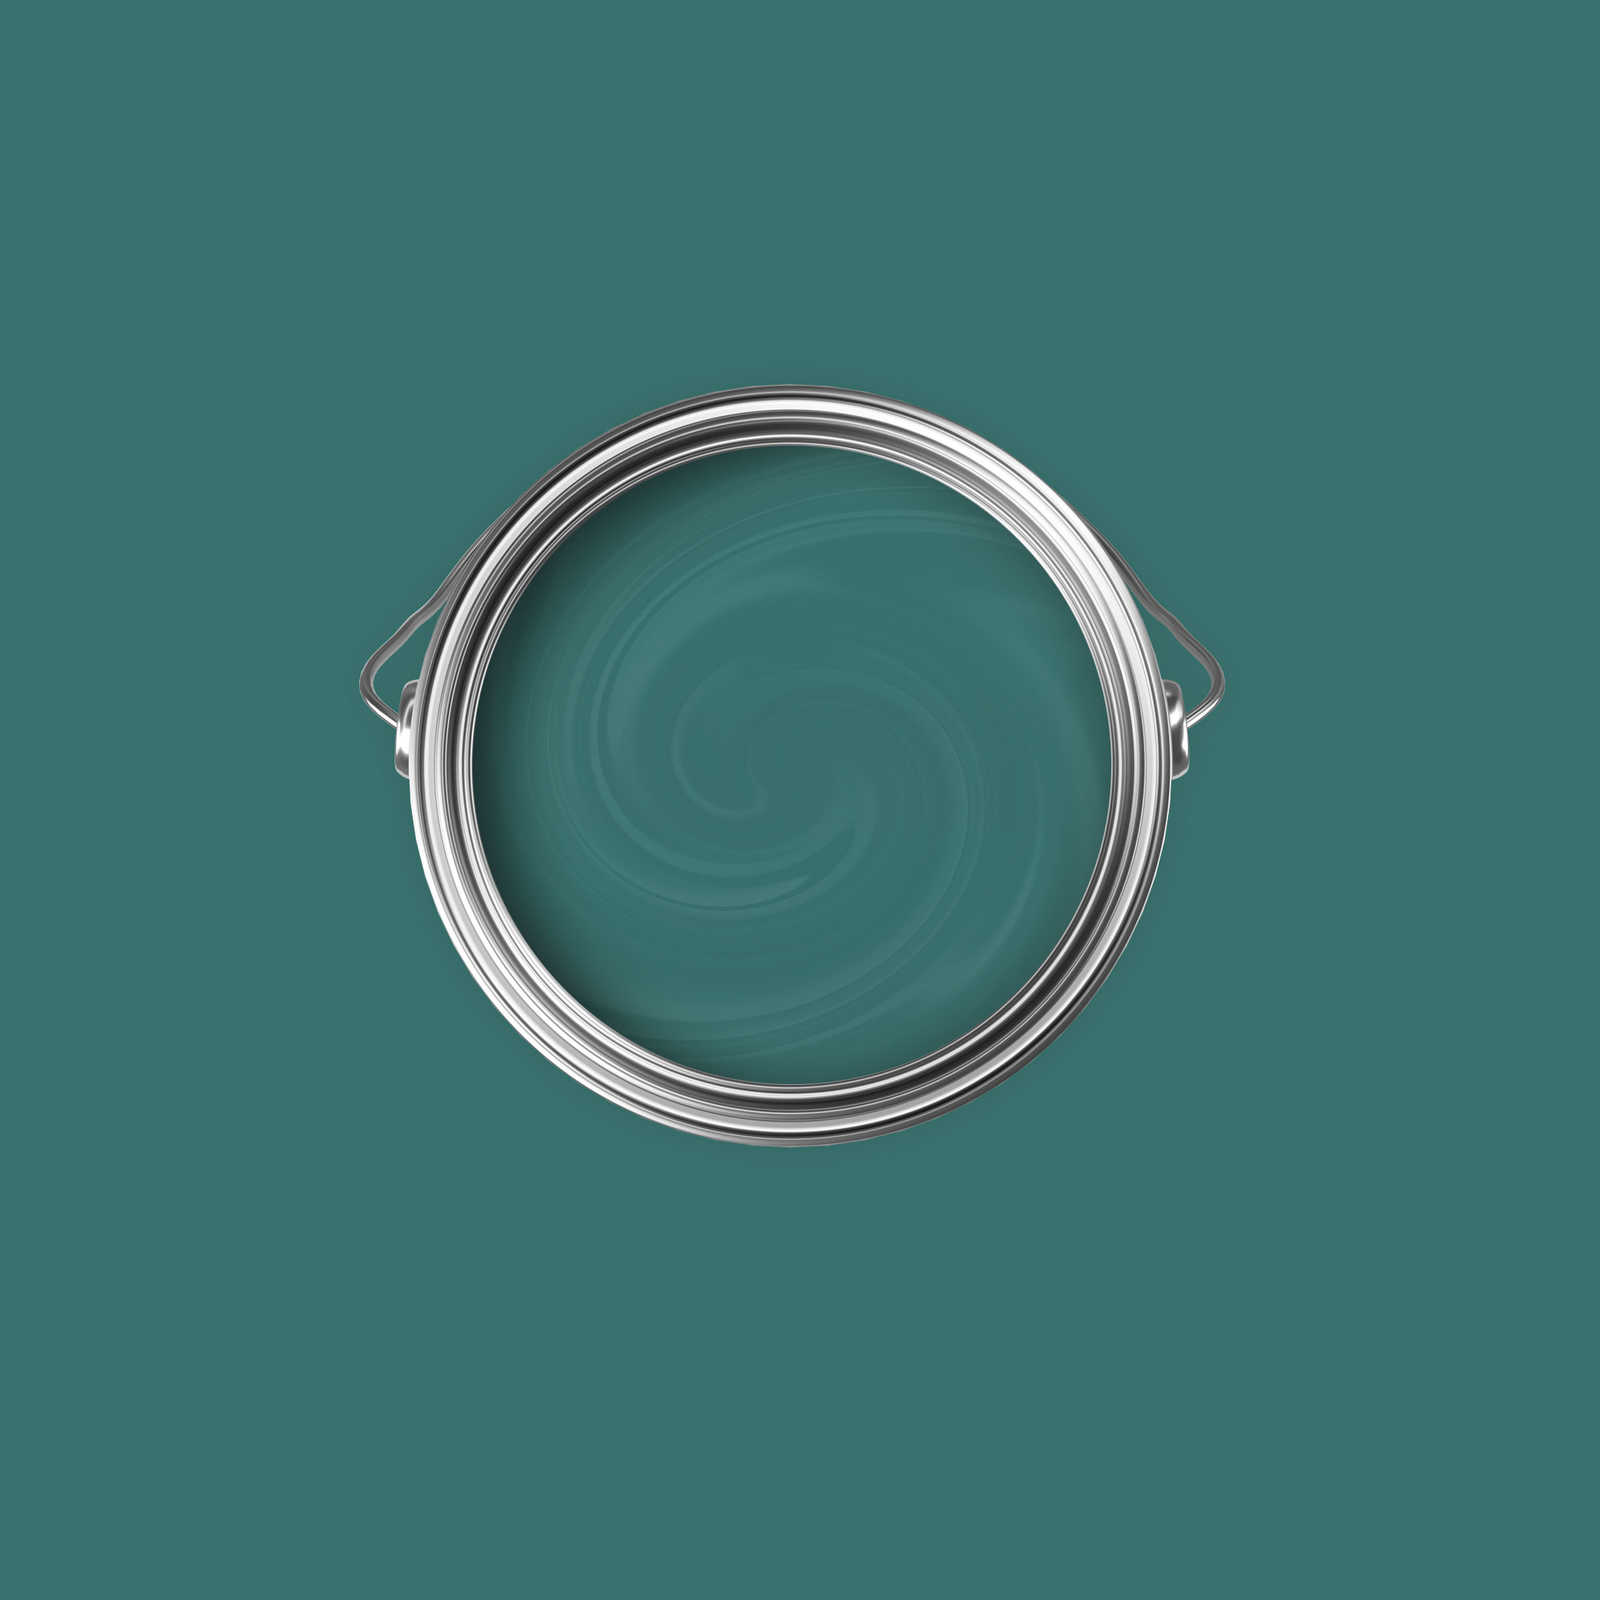             Premium Wandfarbe harmonisches Blaugrün »Expressive Emerald« NW411 – 2,5 Liter
        